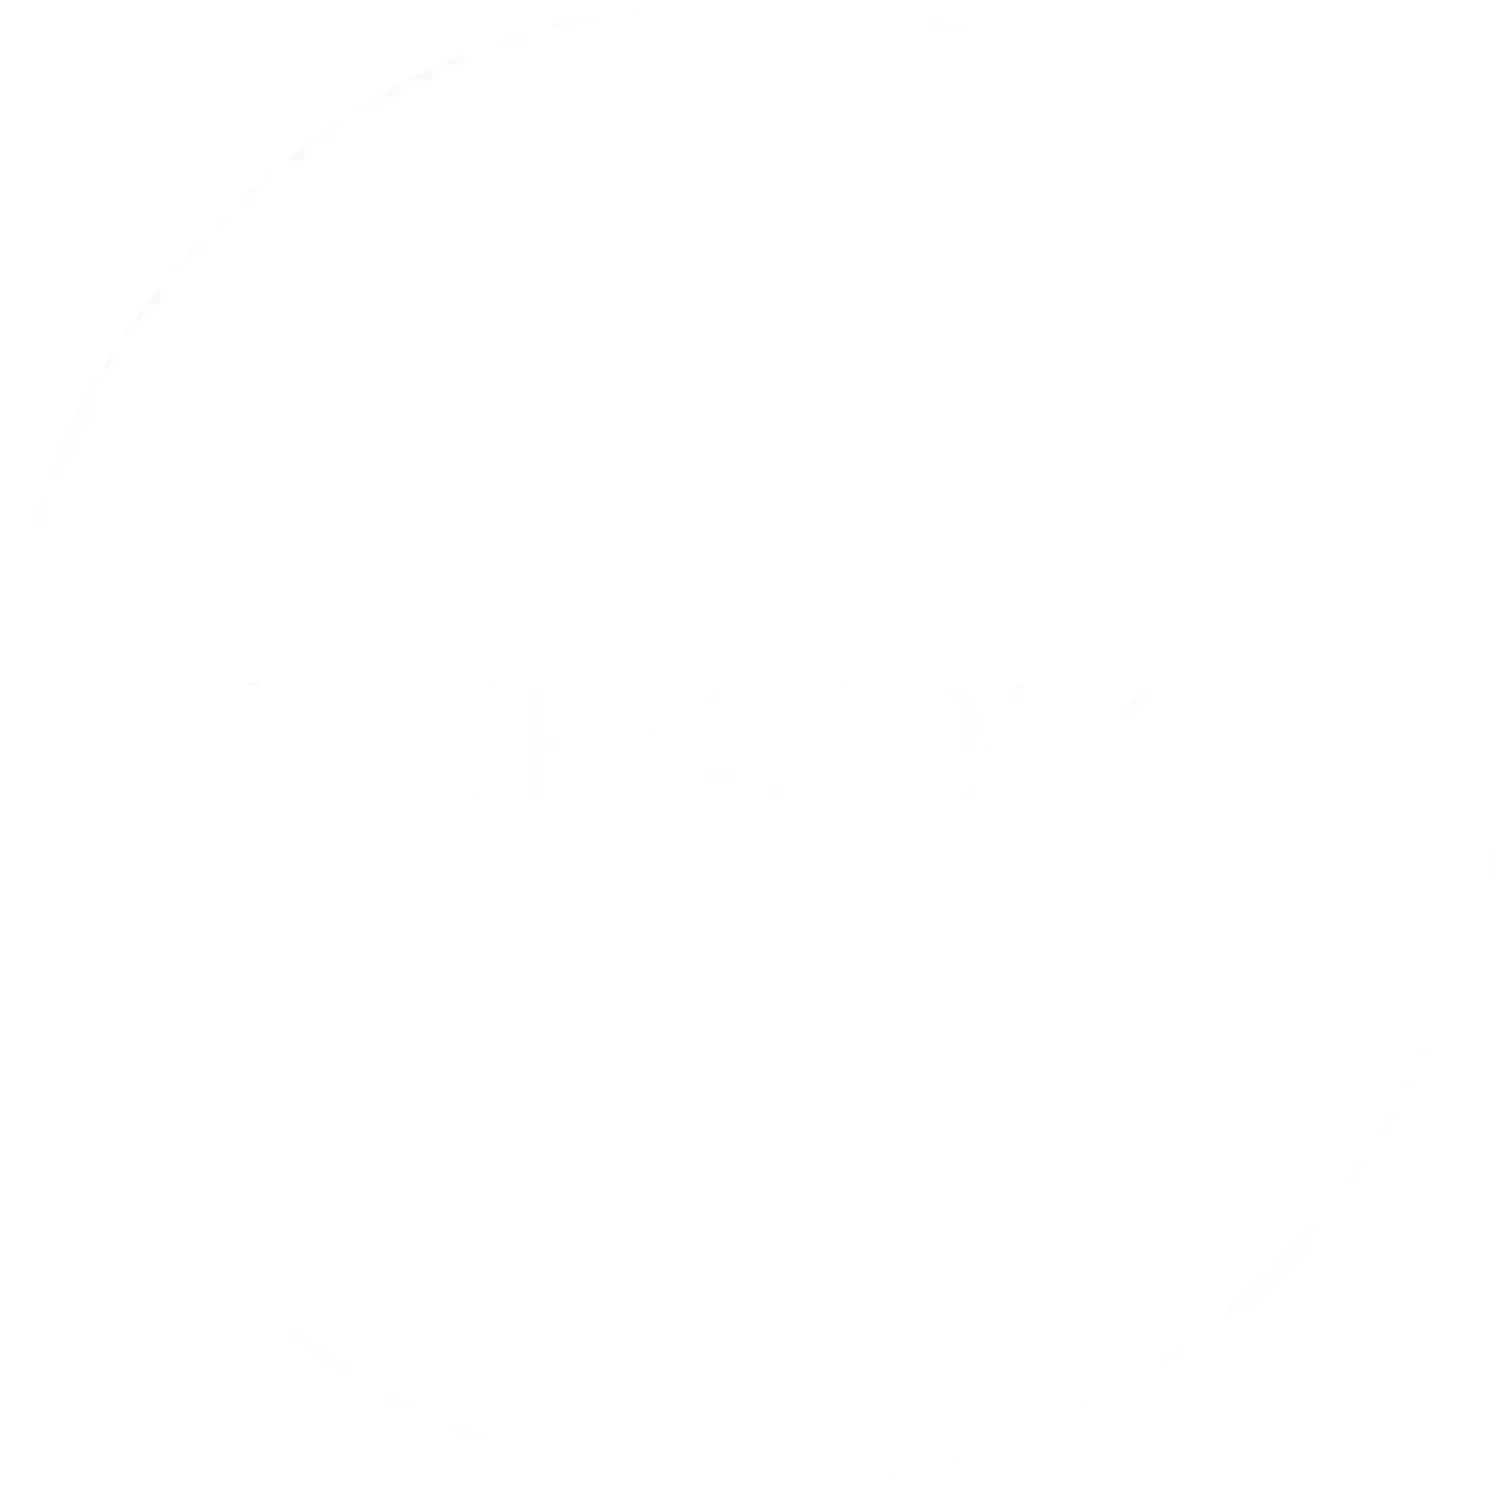 Club Space